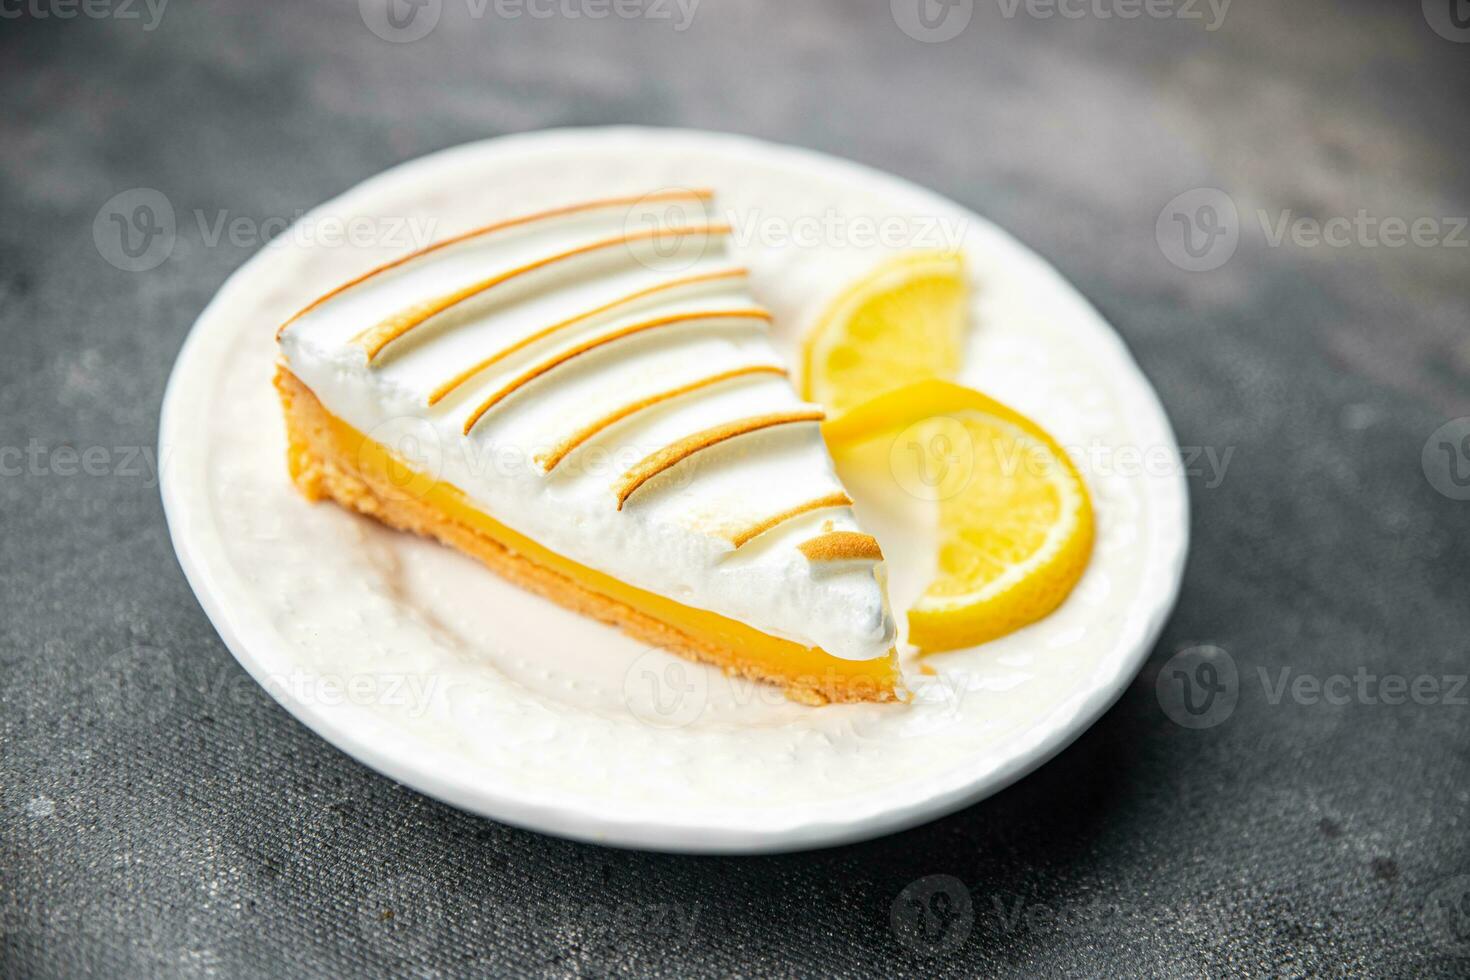 dulce limón tarta merengue postre Listo a comer comida comida bocadillo en el mesa Copiar espacio comida antecedentes rústico parte superior ver foto